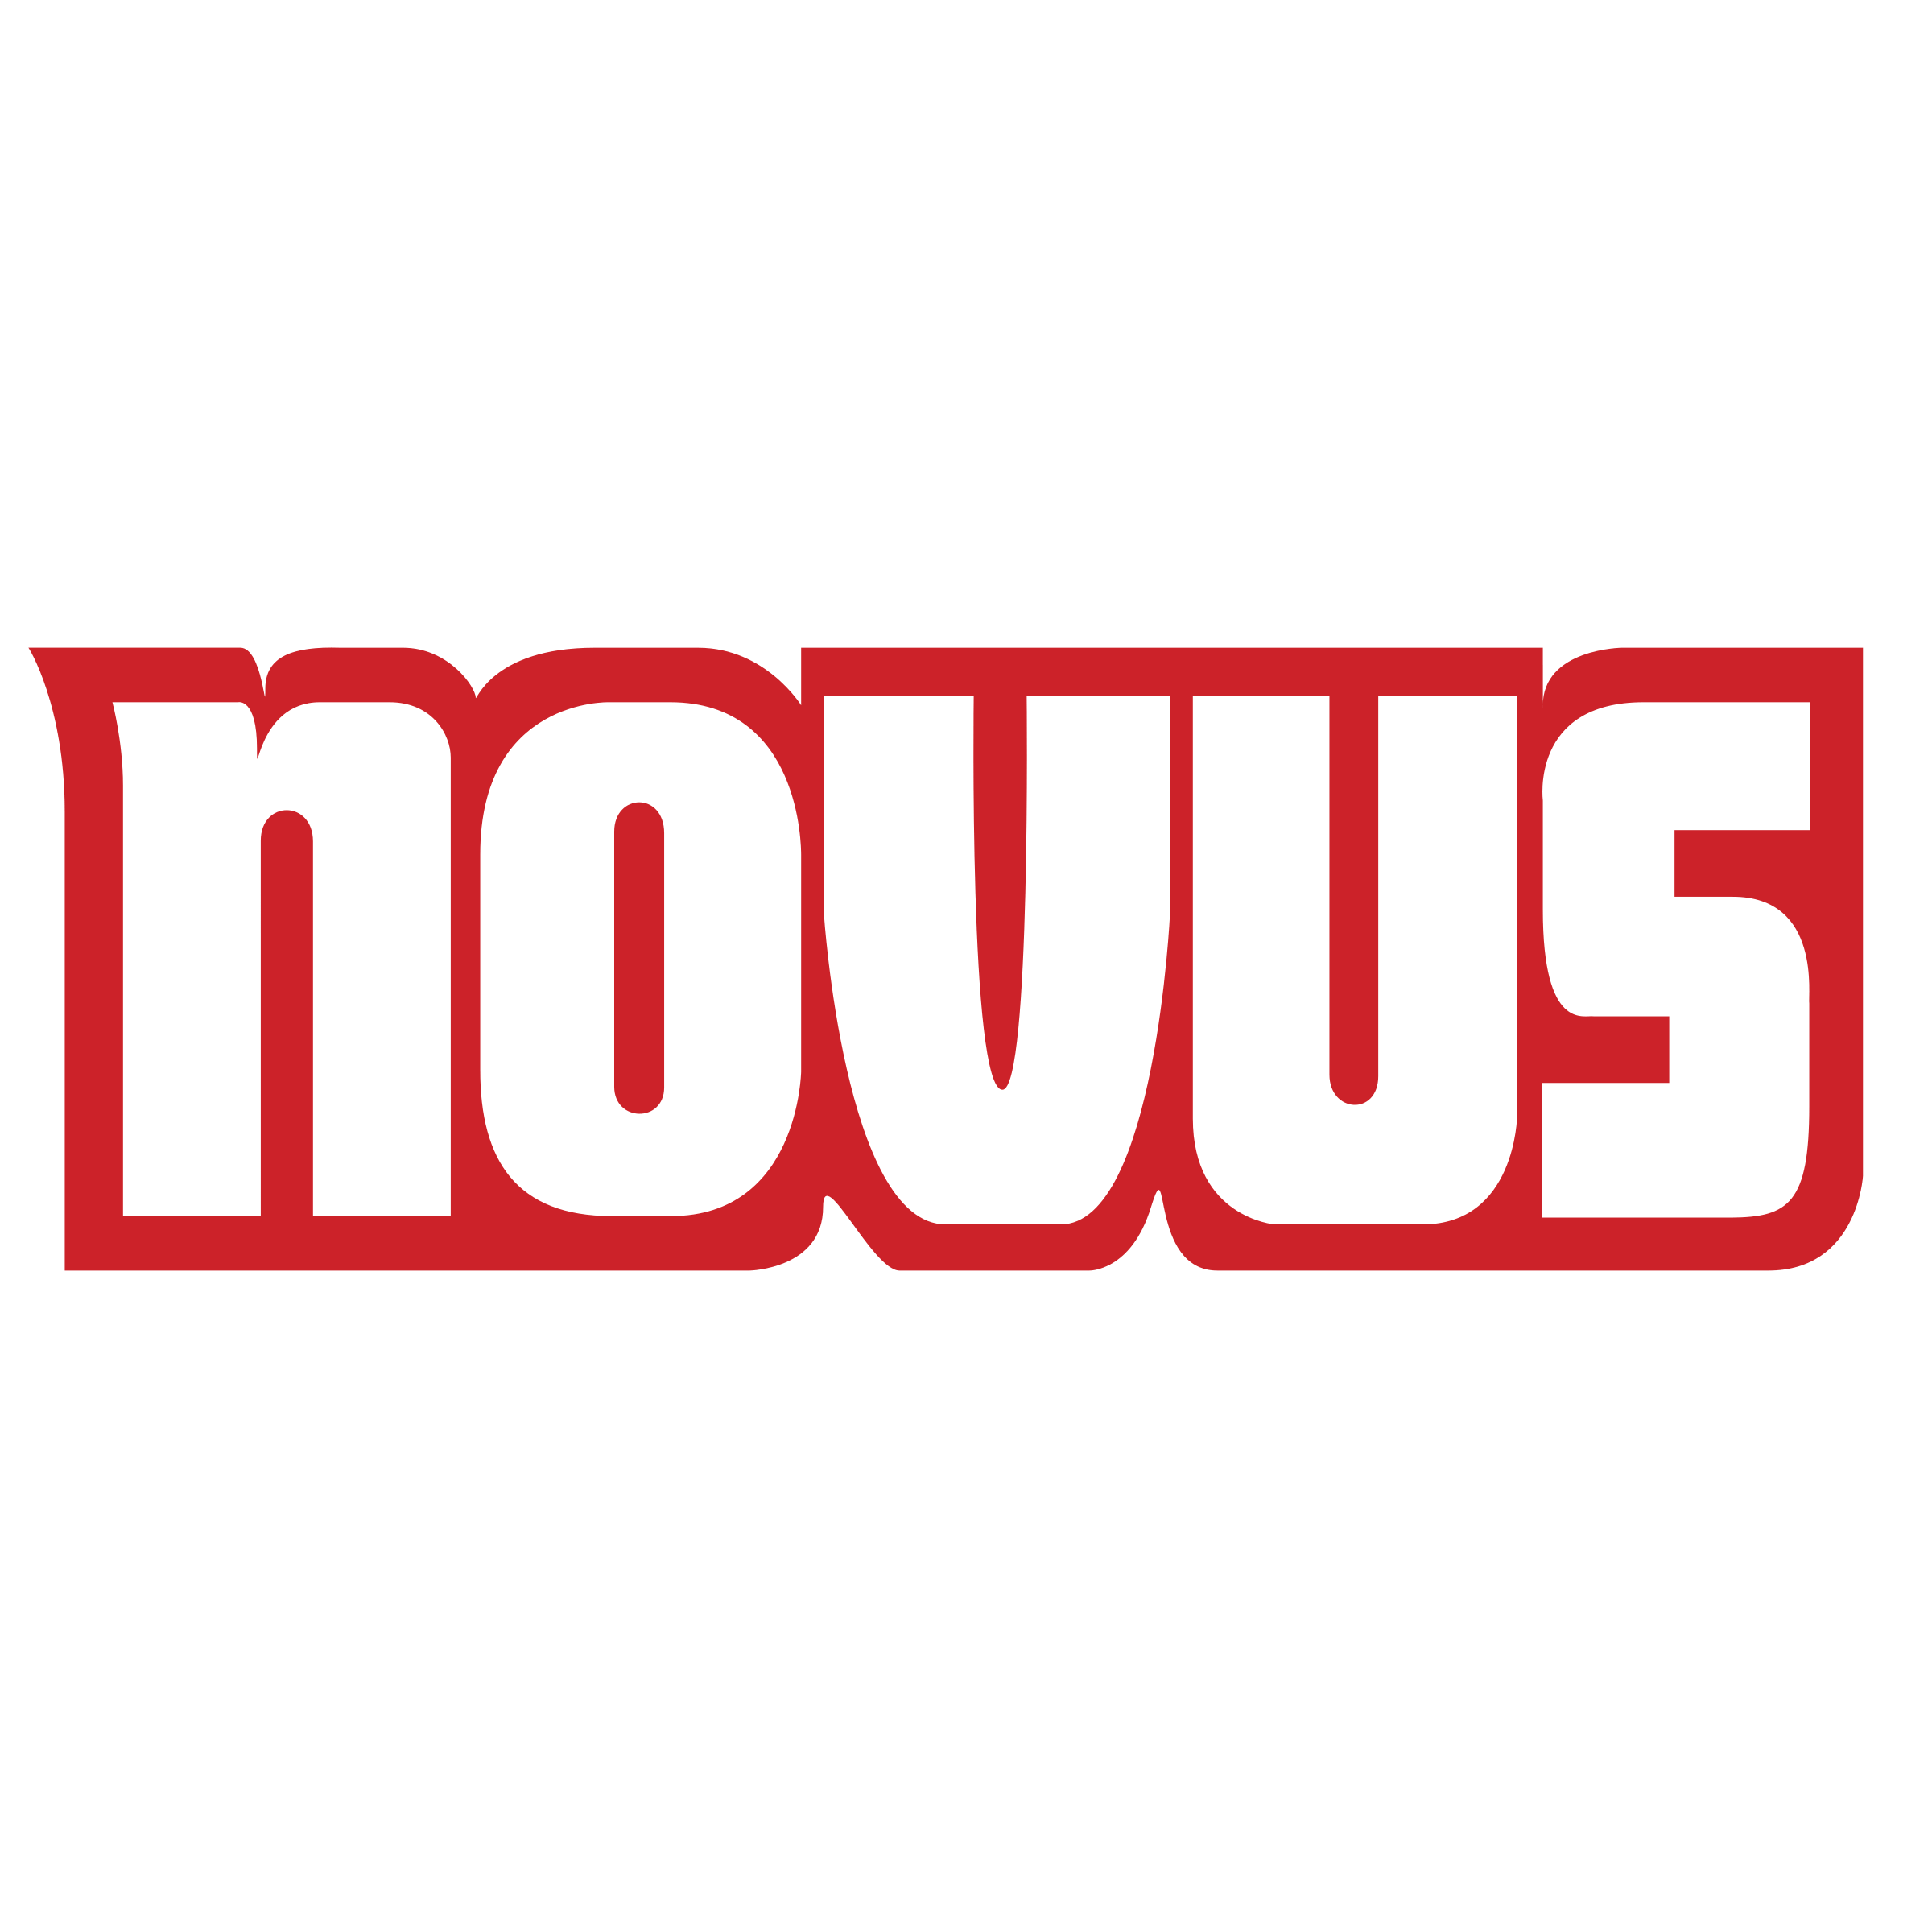 Novus Logo - Novus Logo PNG Transparent & SVG Vector - Freebie Supply